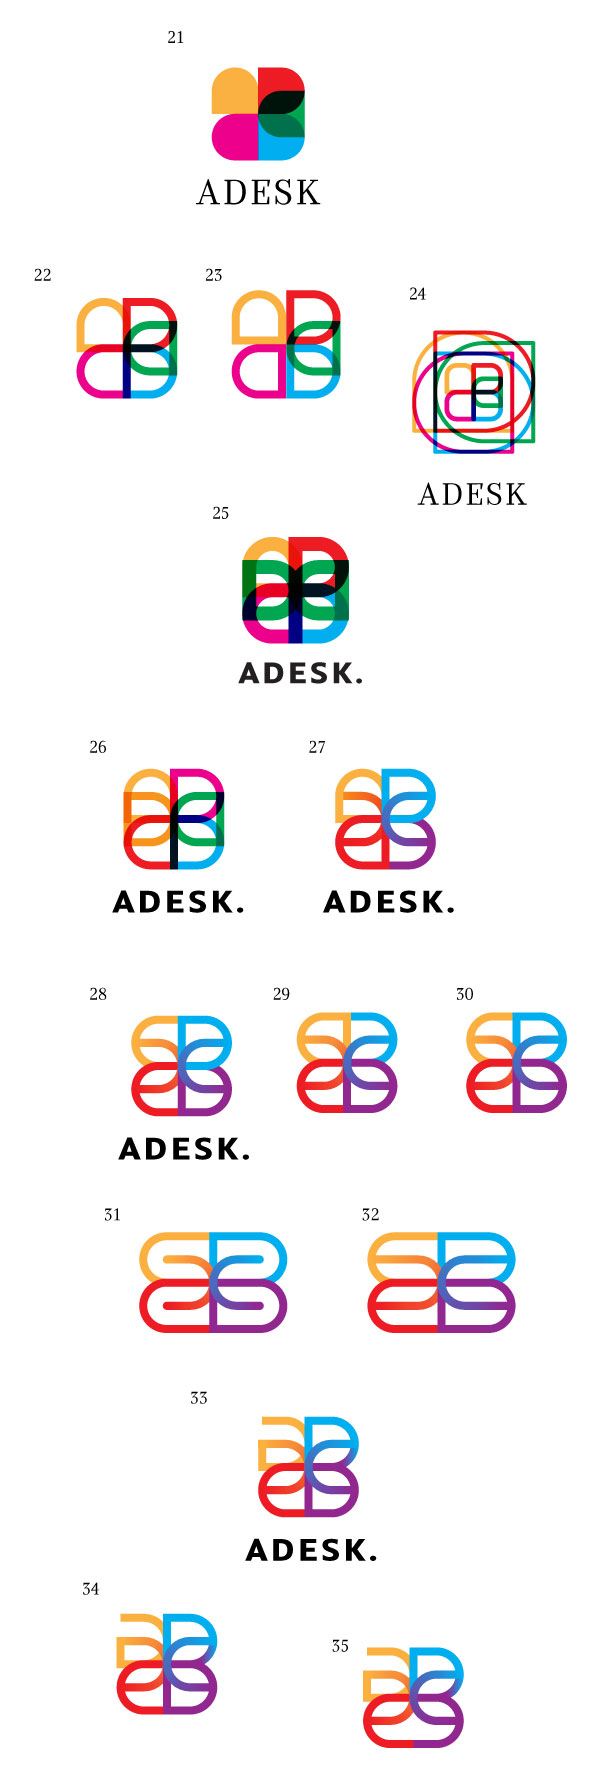 adesk process 02